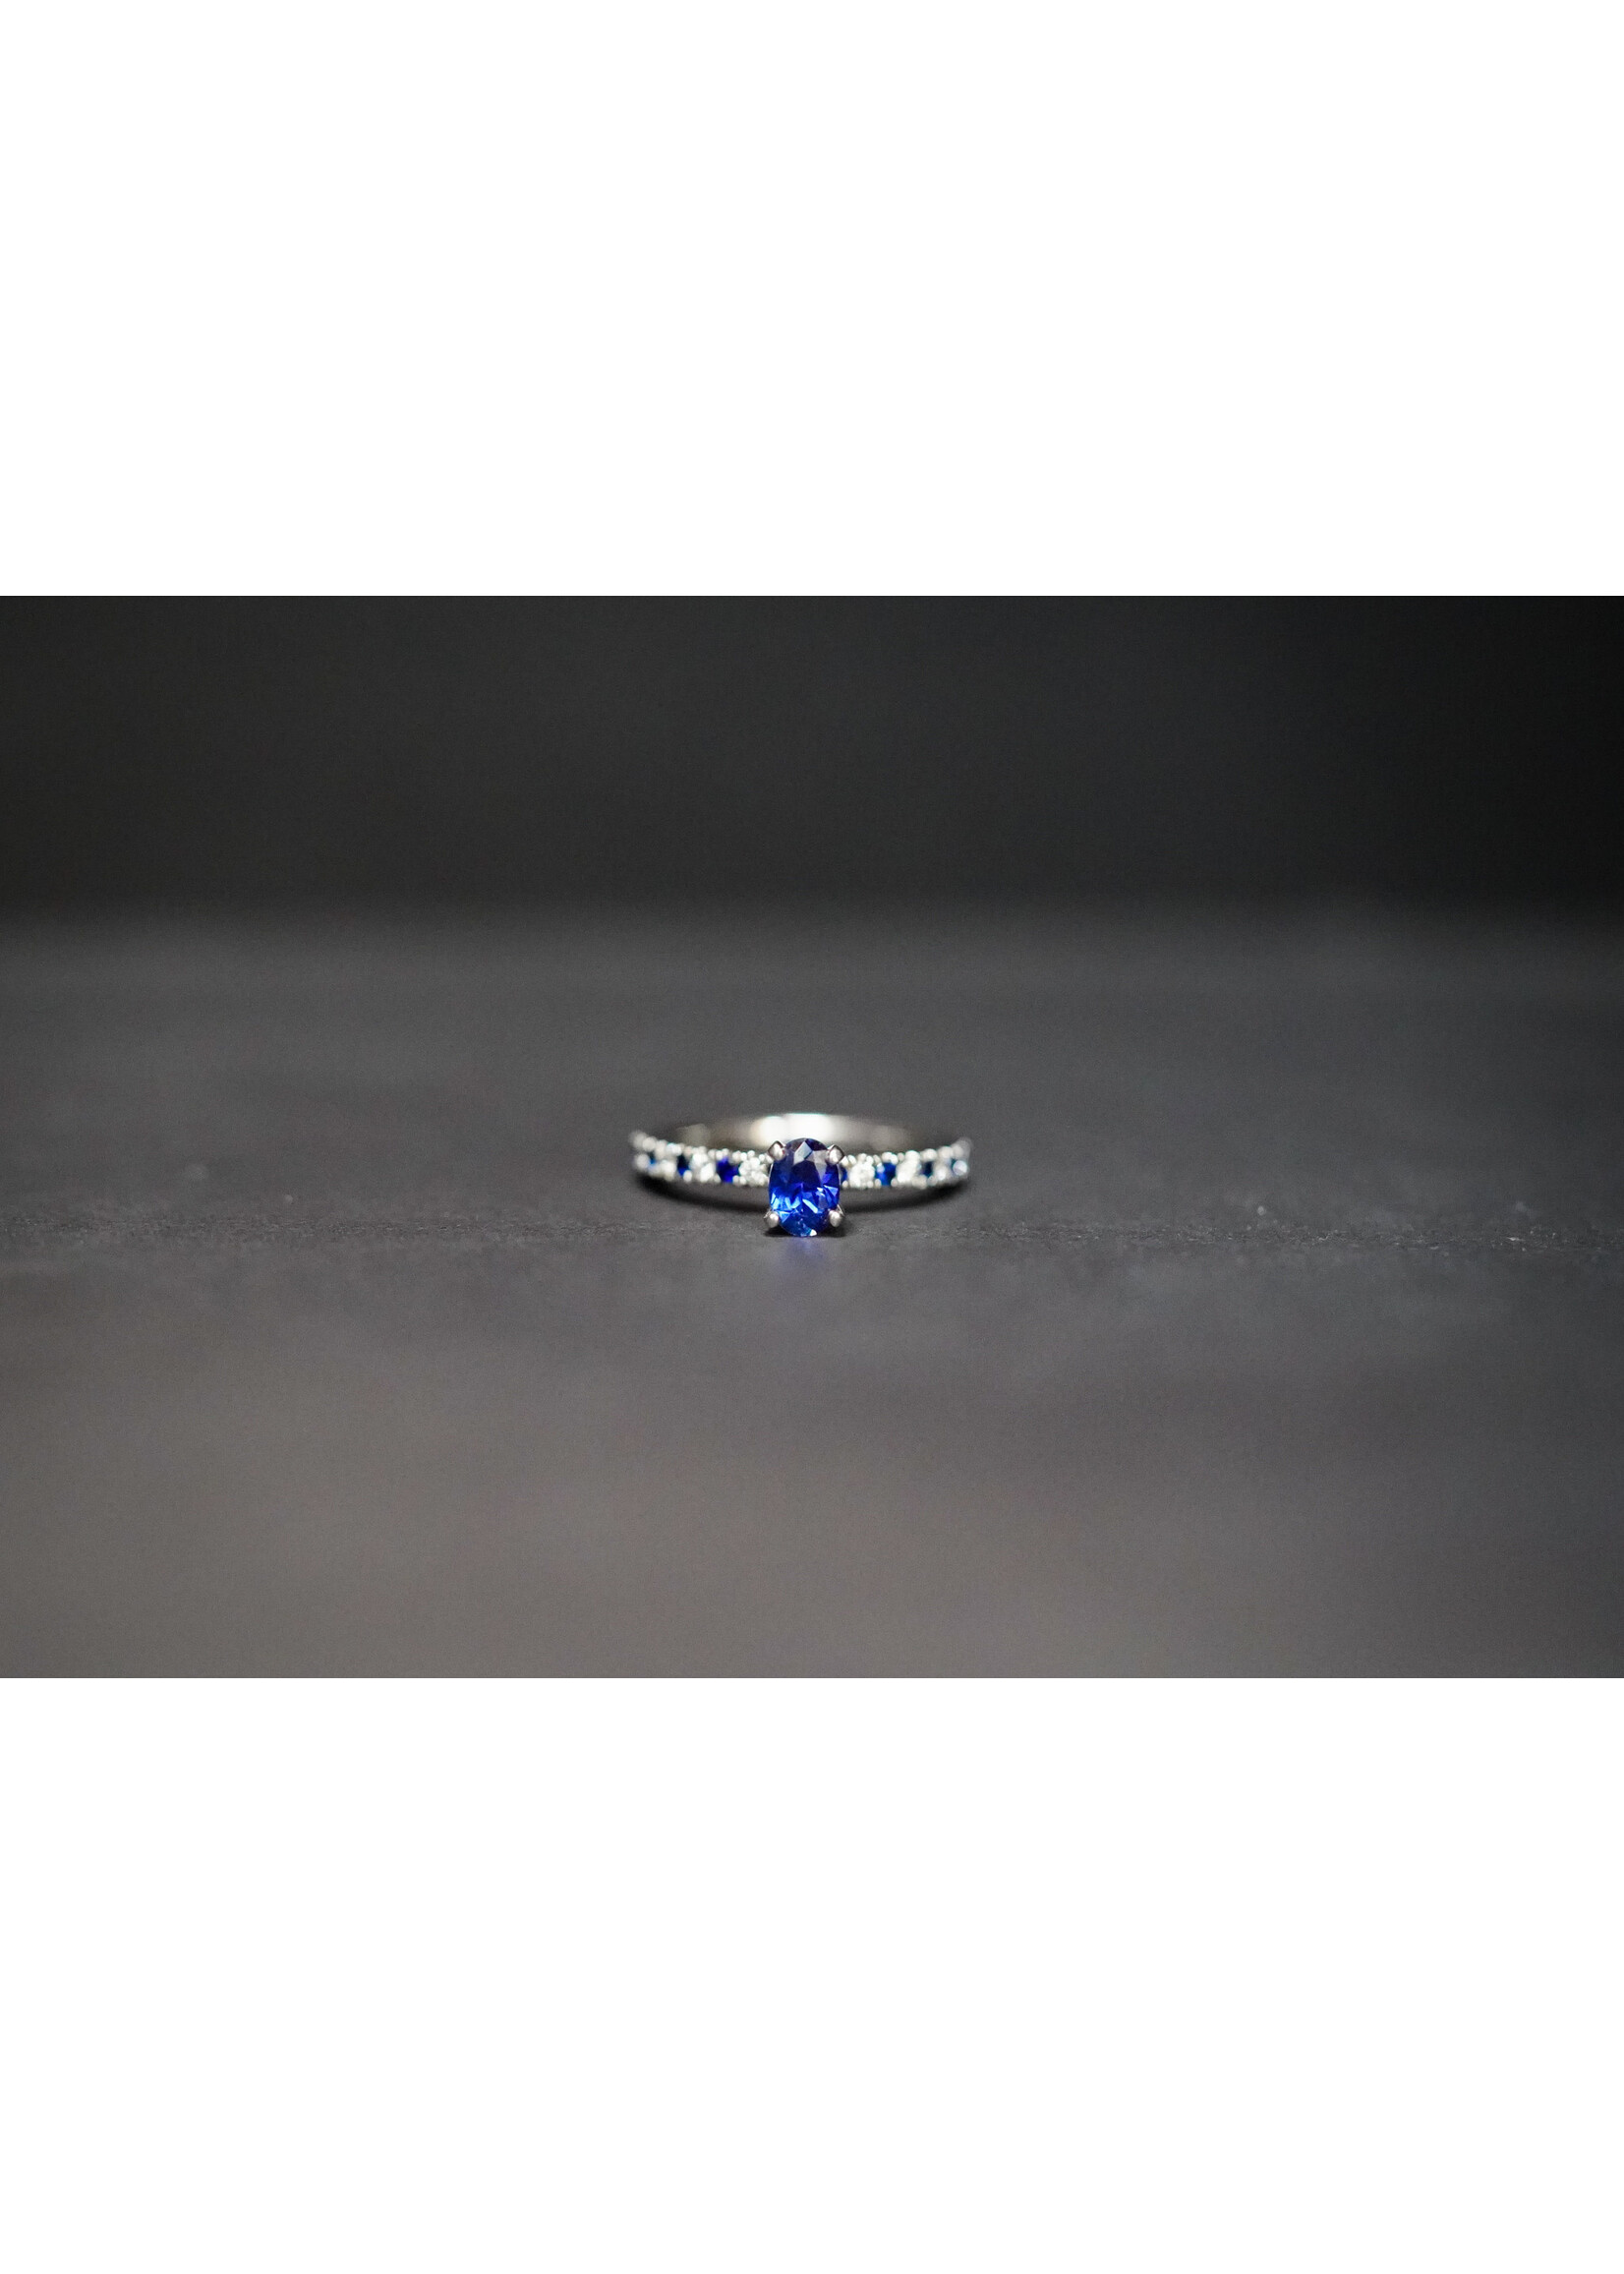 14KW 3.14g 1.00ctw (.70ctr) Sapphire & Diamond Vera Wang Ring (size 6.75)